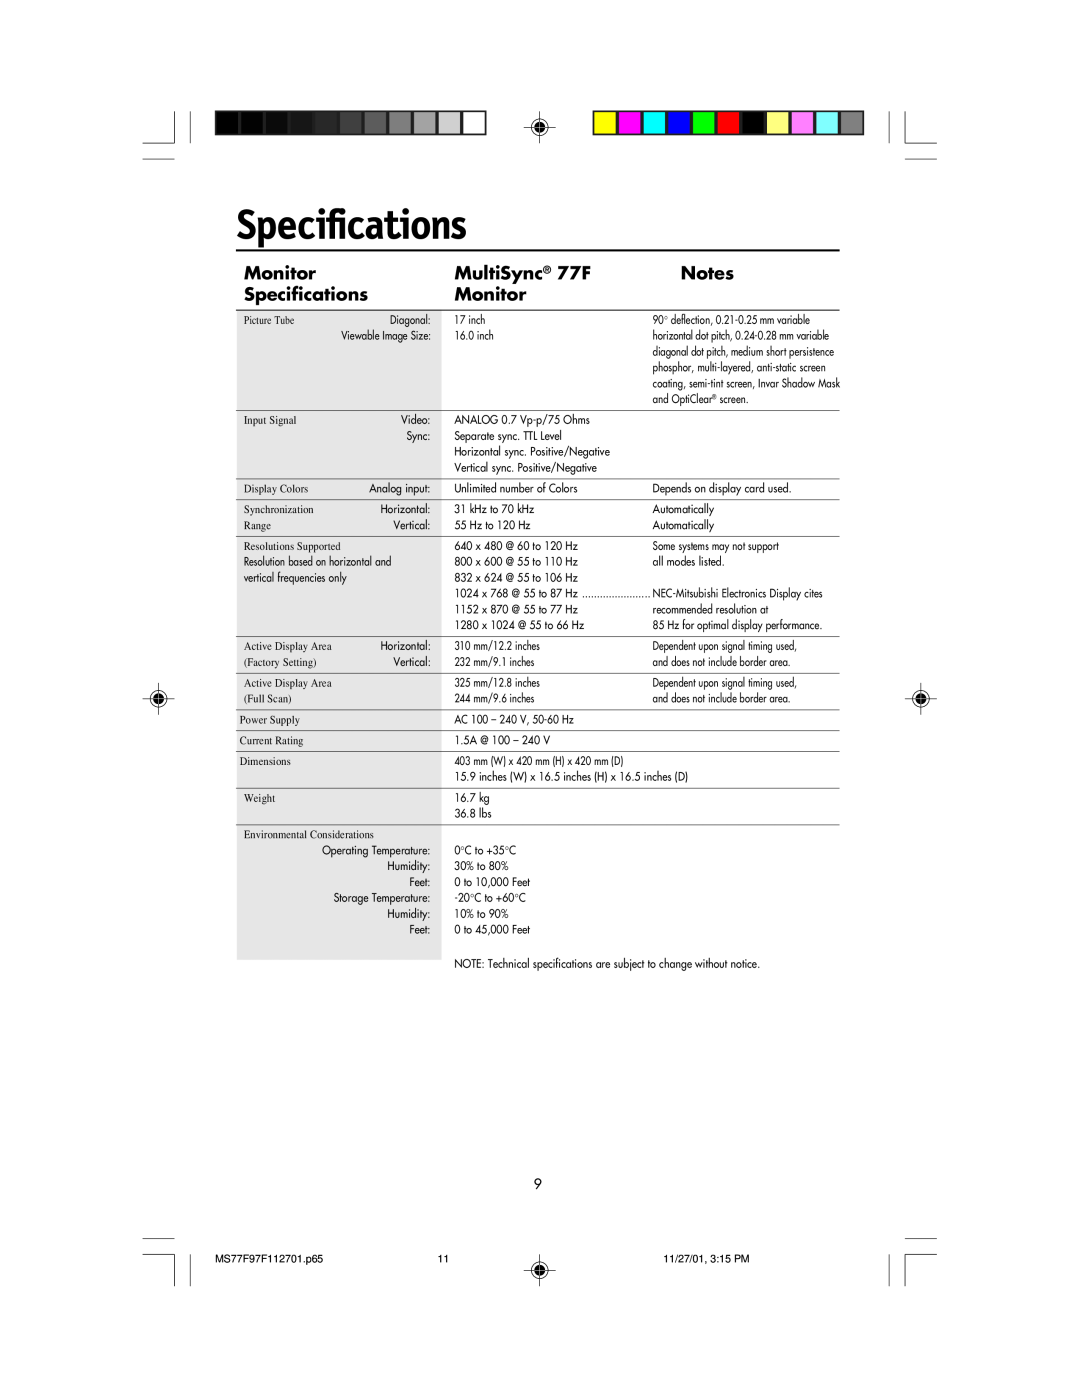 NEC 97F manual Specifications, Monitor, MultiSync 77F 